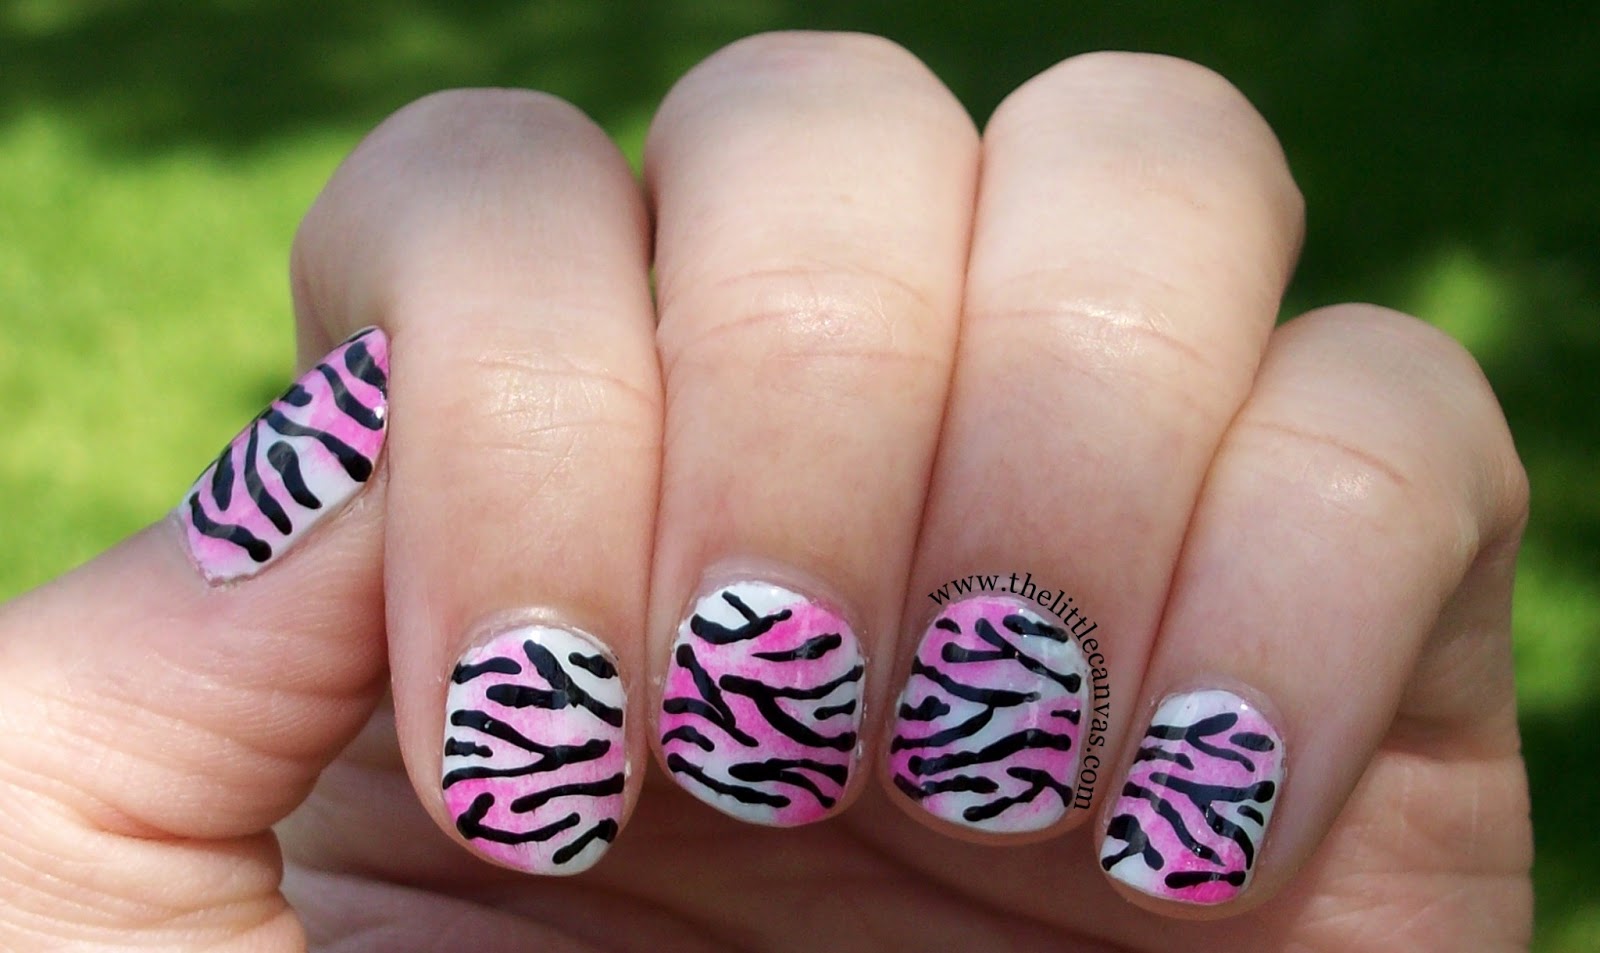 2. Purple and White Zebra Stripe Nail Art - wide 5